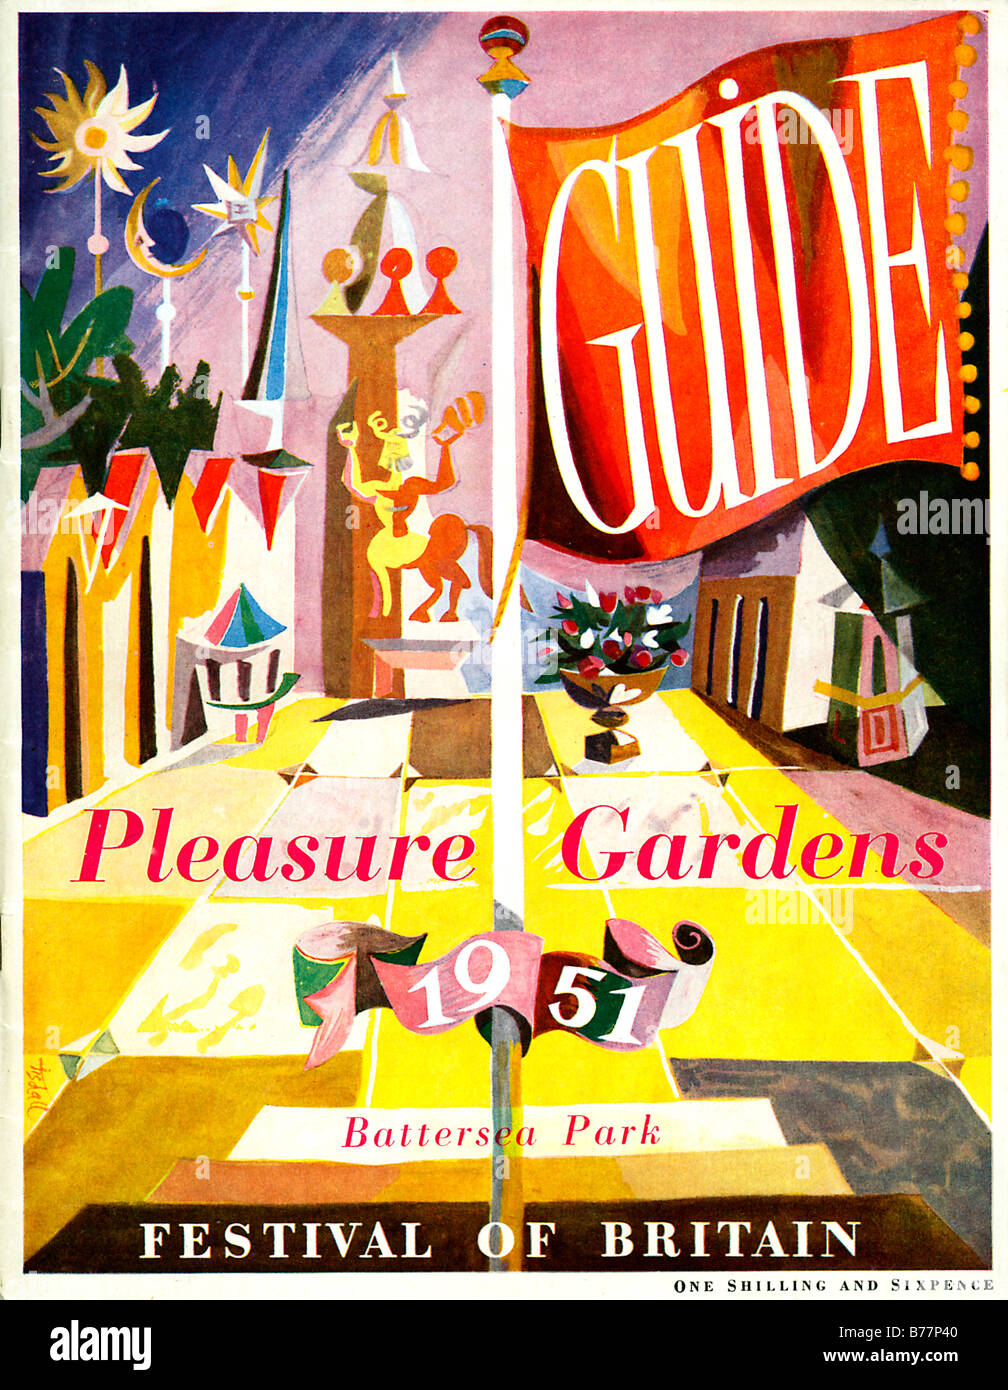 Battersea Park Festival of Britain 1951-Broschüre für das Festival Vergnügen Gärten Thameside in Battersea Stockfoto